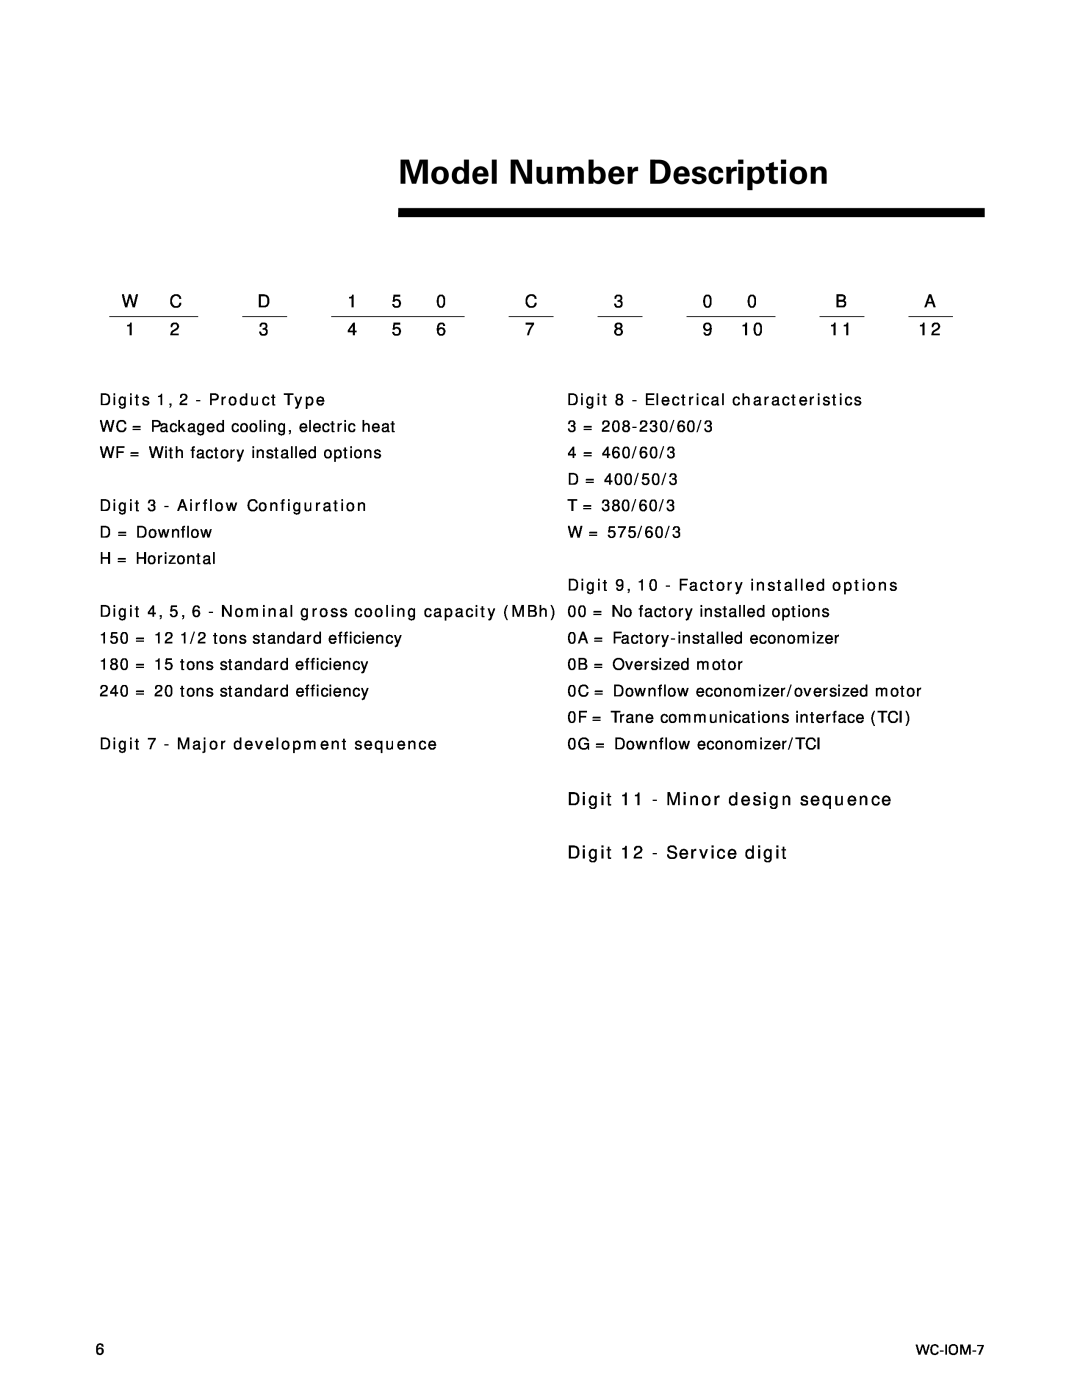 Trane WC-IOM-7 manual Model Number Description, Digit, Minor design sequence, Service digit 